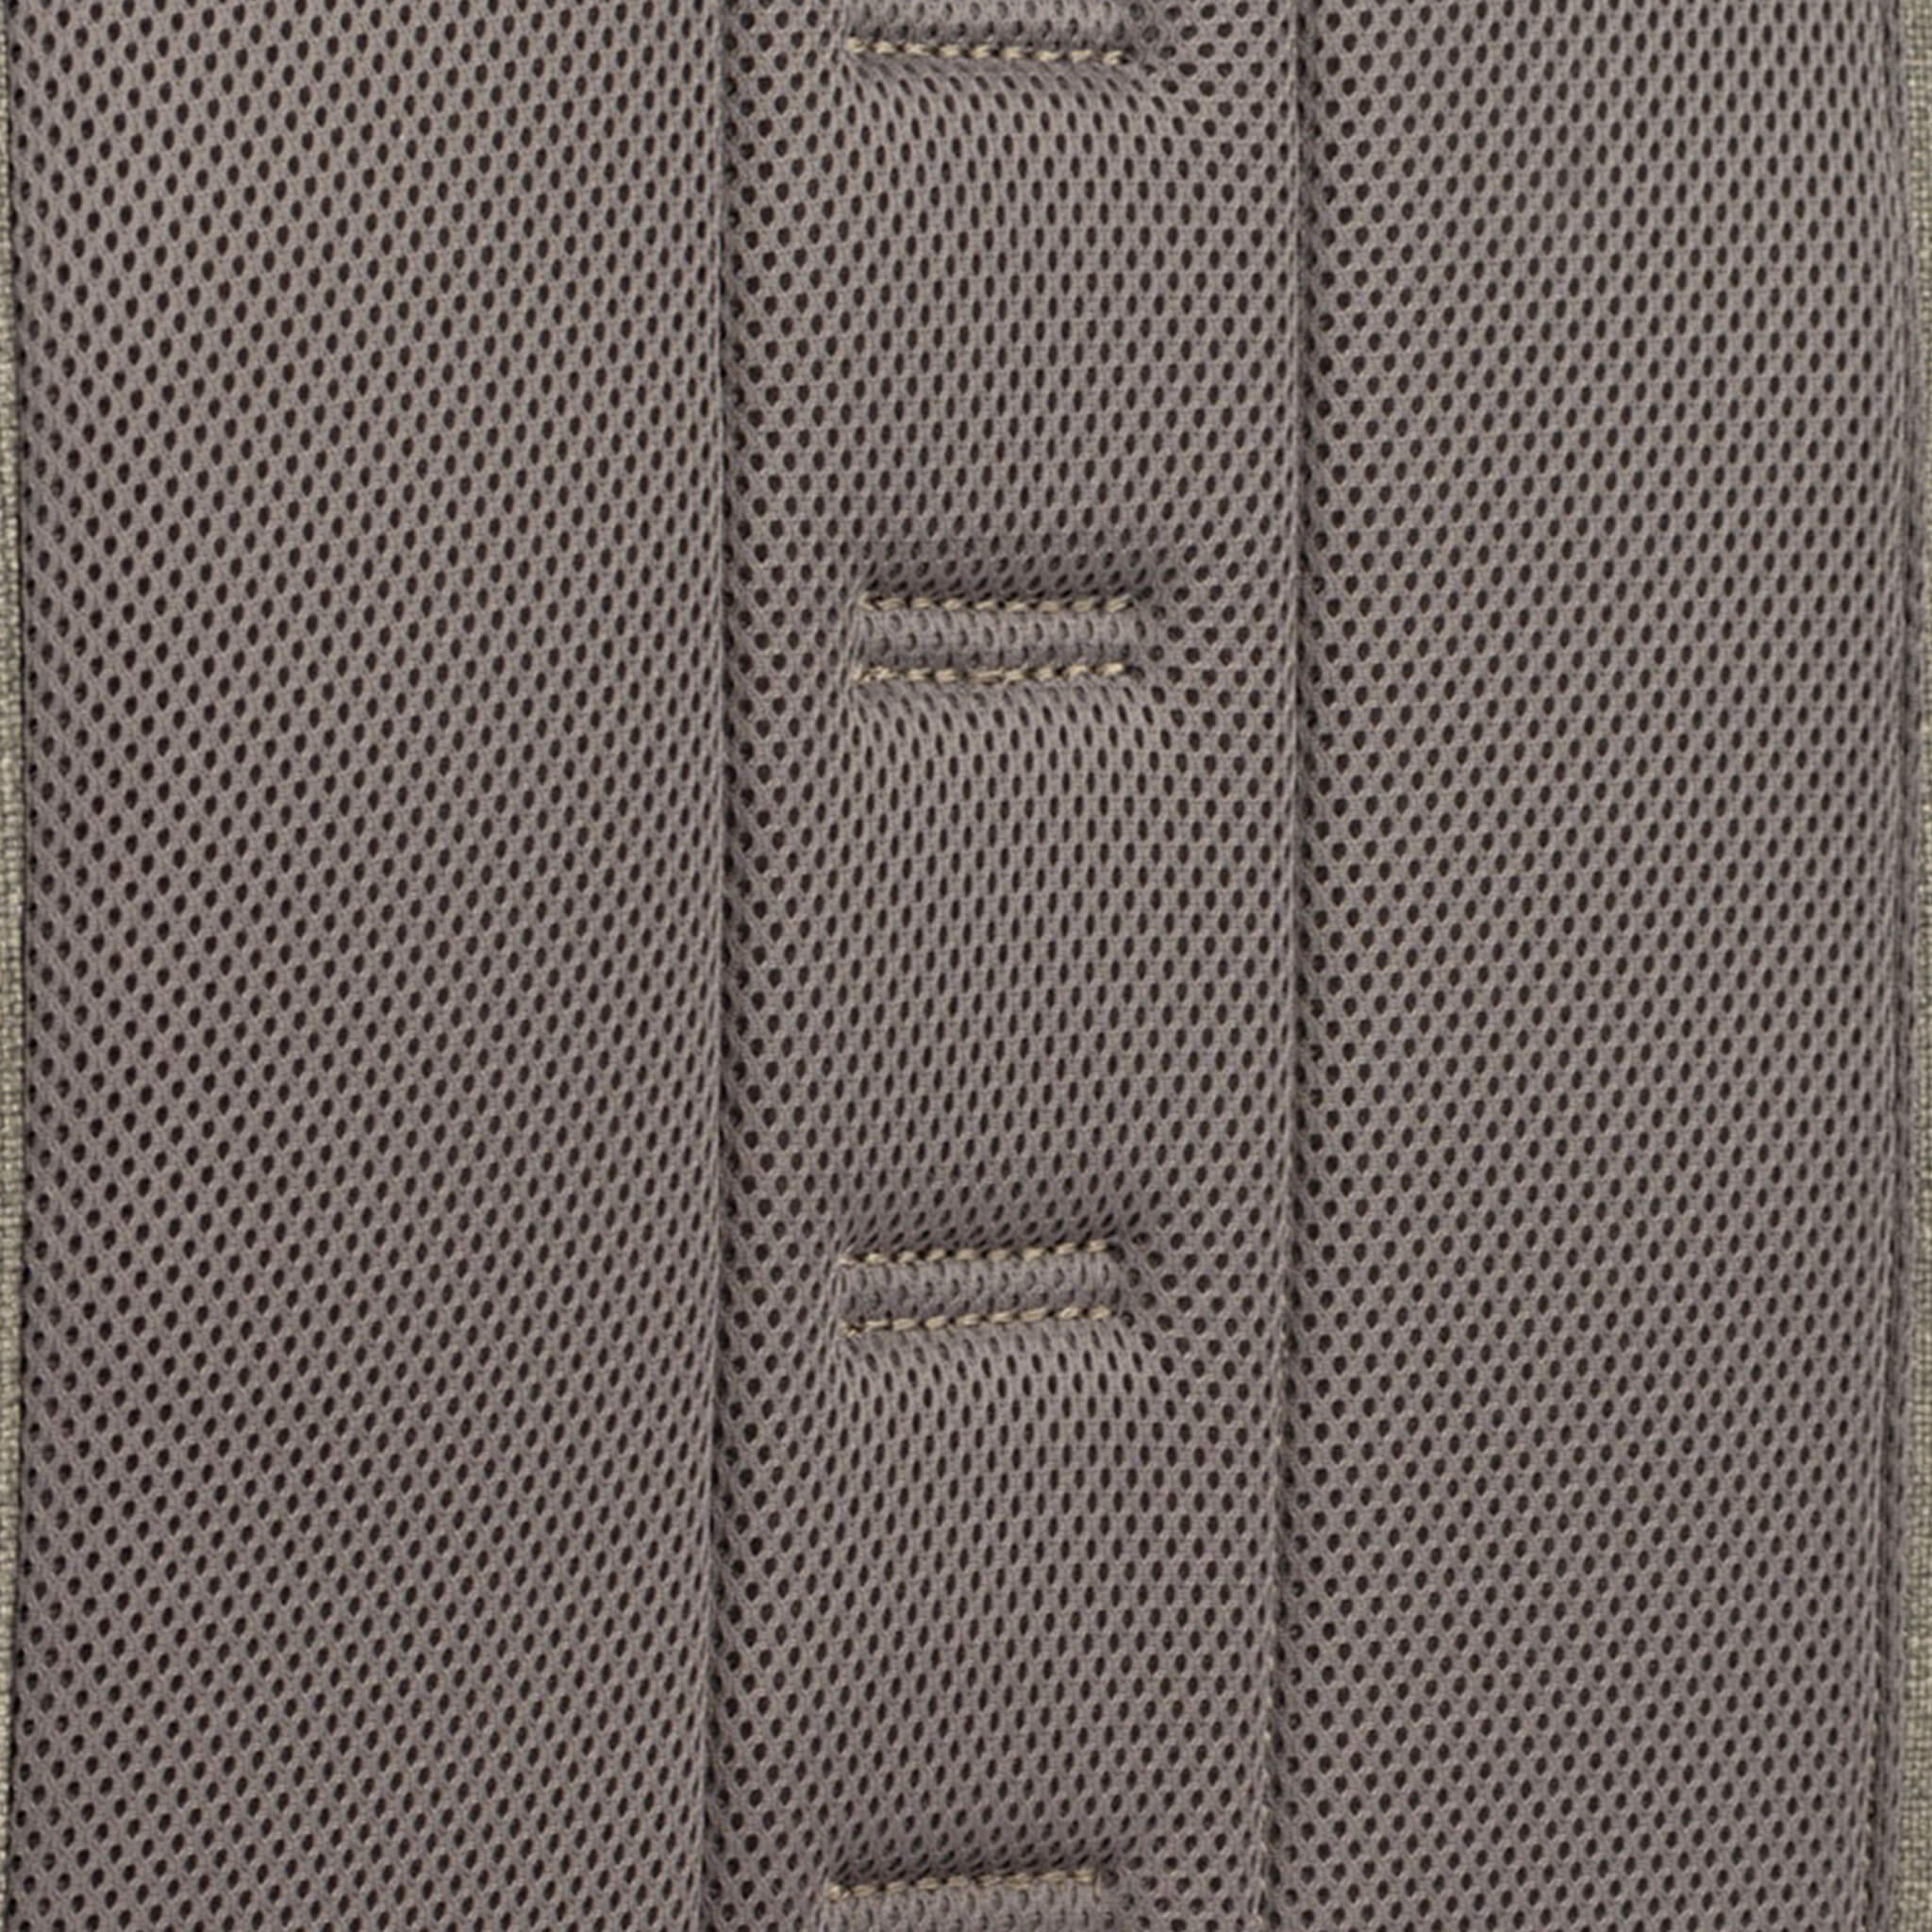 Comfort-padded back panel